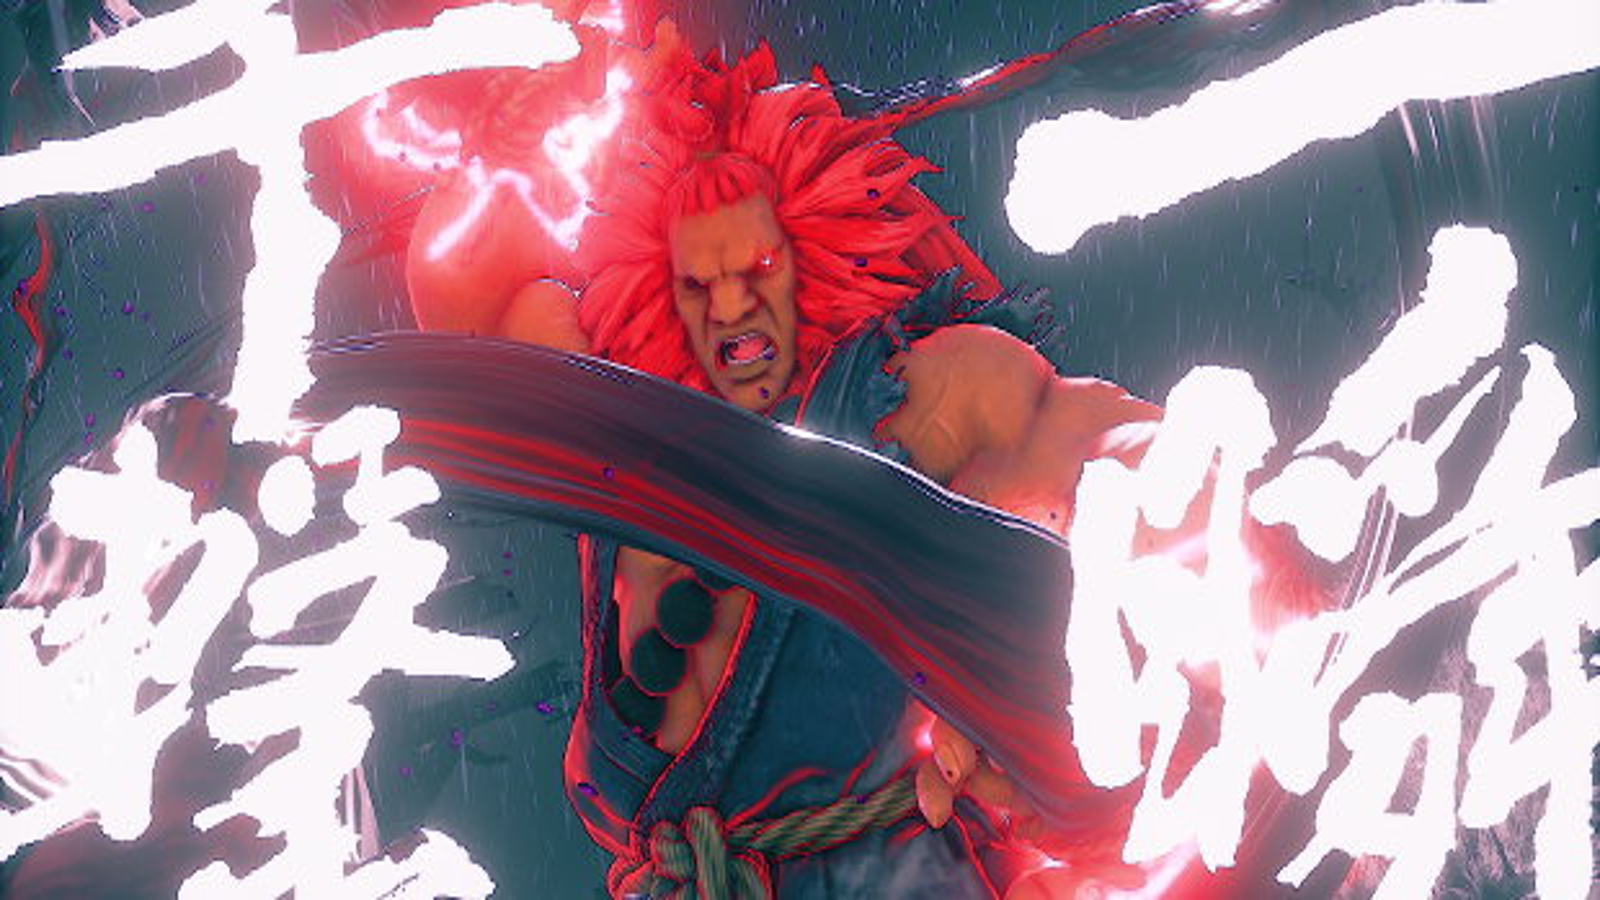 Super Street Fighter 4: Akuma Raging Demon Setups Video in Actual Matches